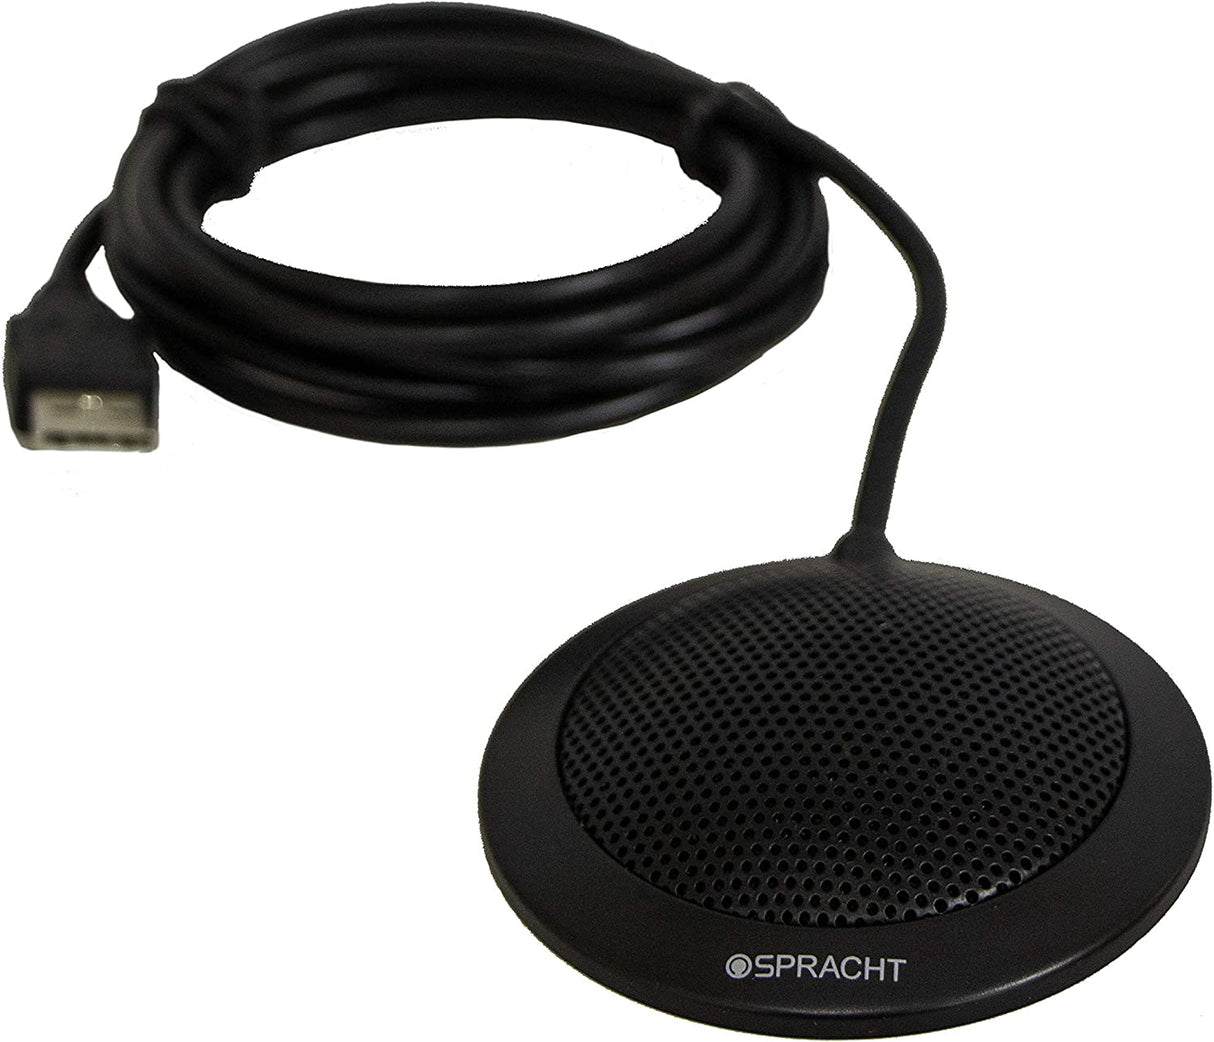 Spracht MIC-2010 Aura USB Mic Digital USB Microphone, Black